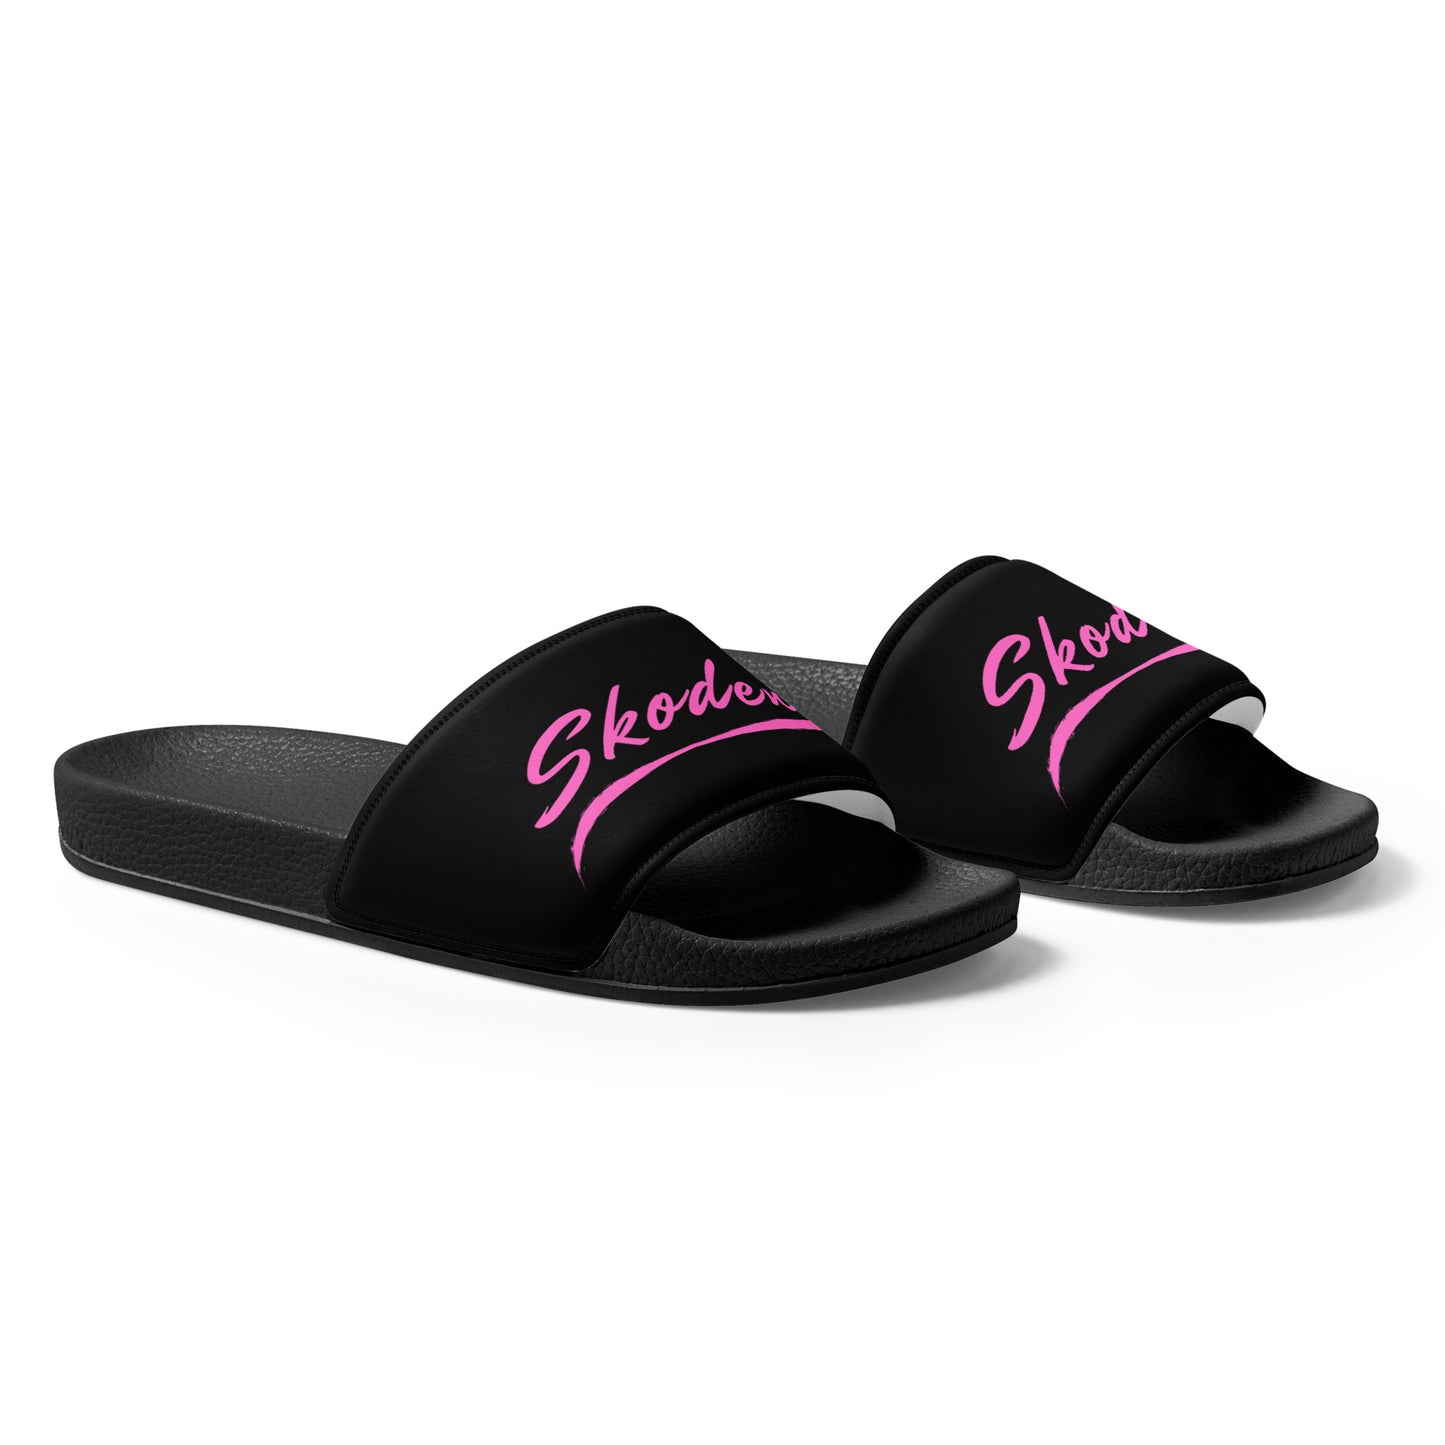 Women's Skoden Pink slides